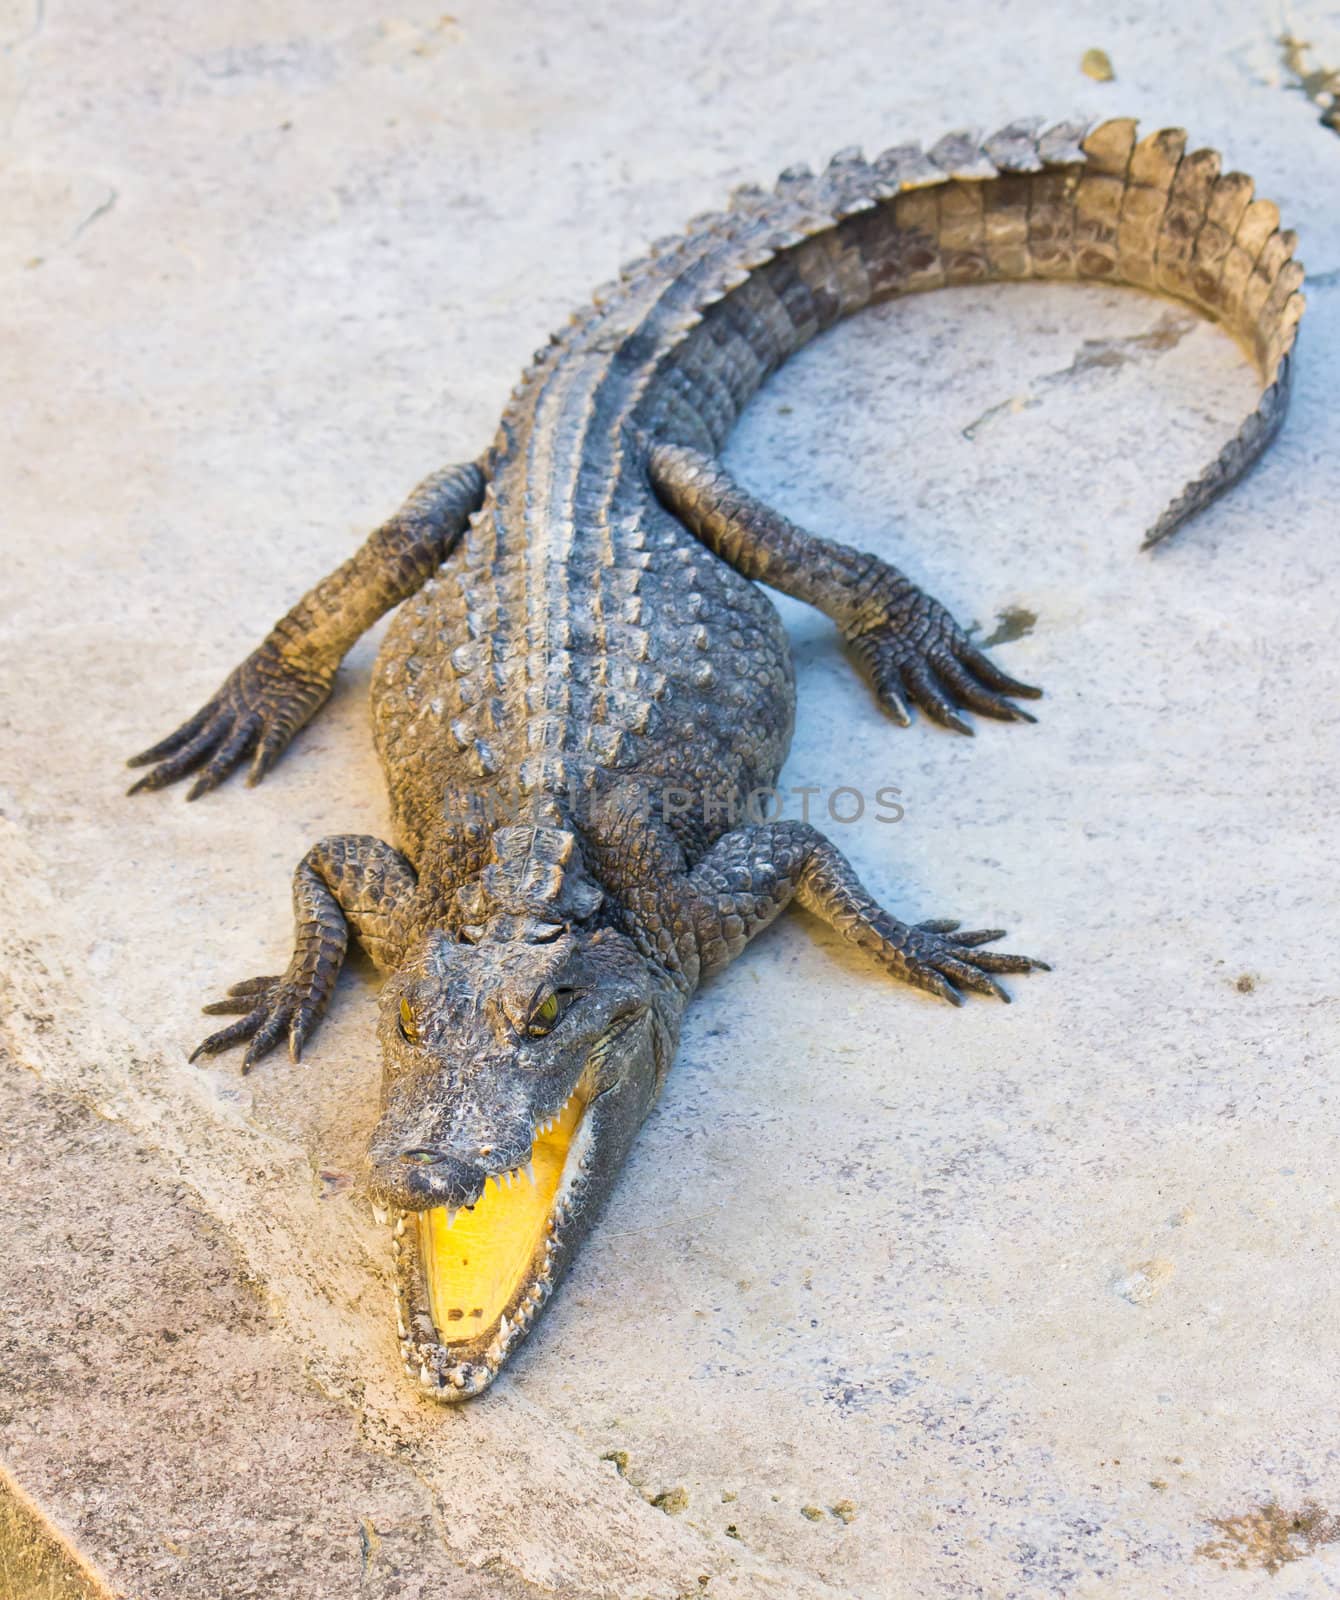 Dangerous crocodile open mouth